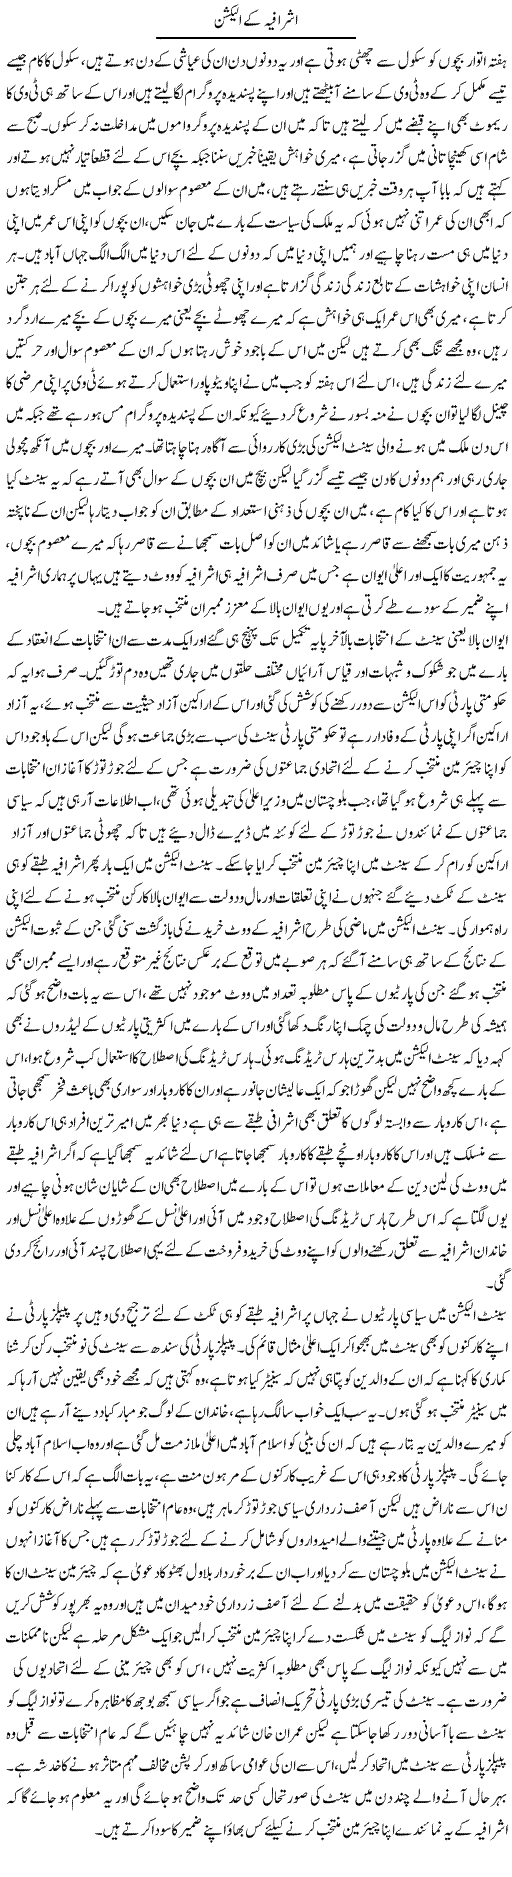 Ashrafia Ke Election | Abdul Qadir Hassan | Daily Urdu Columns